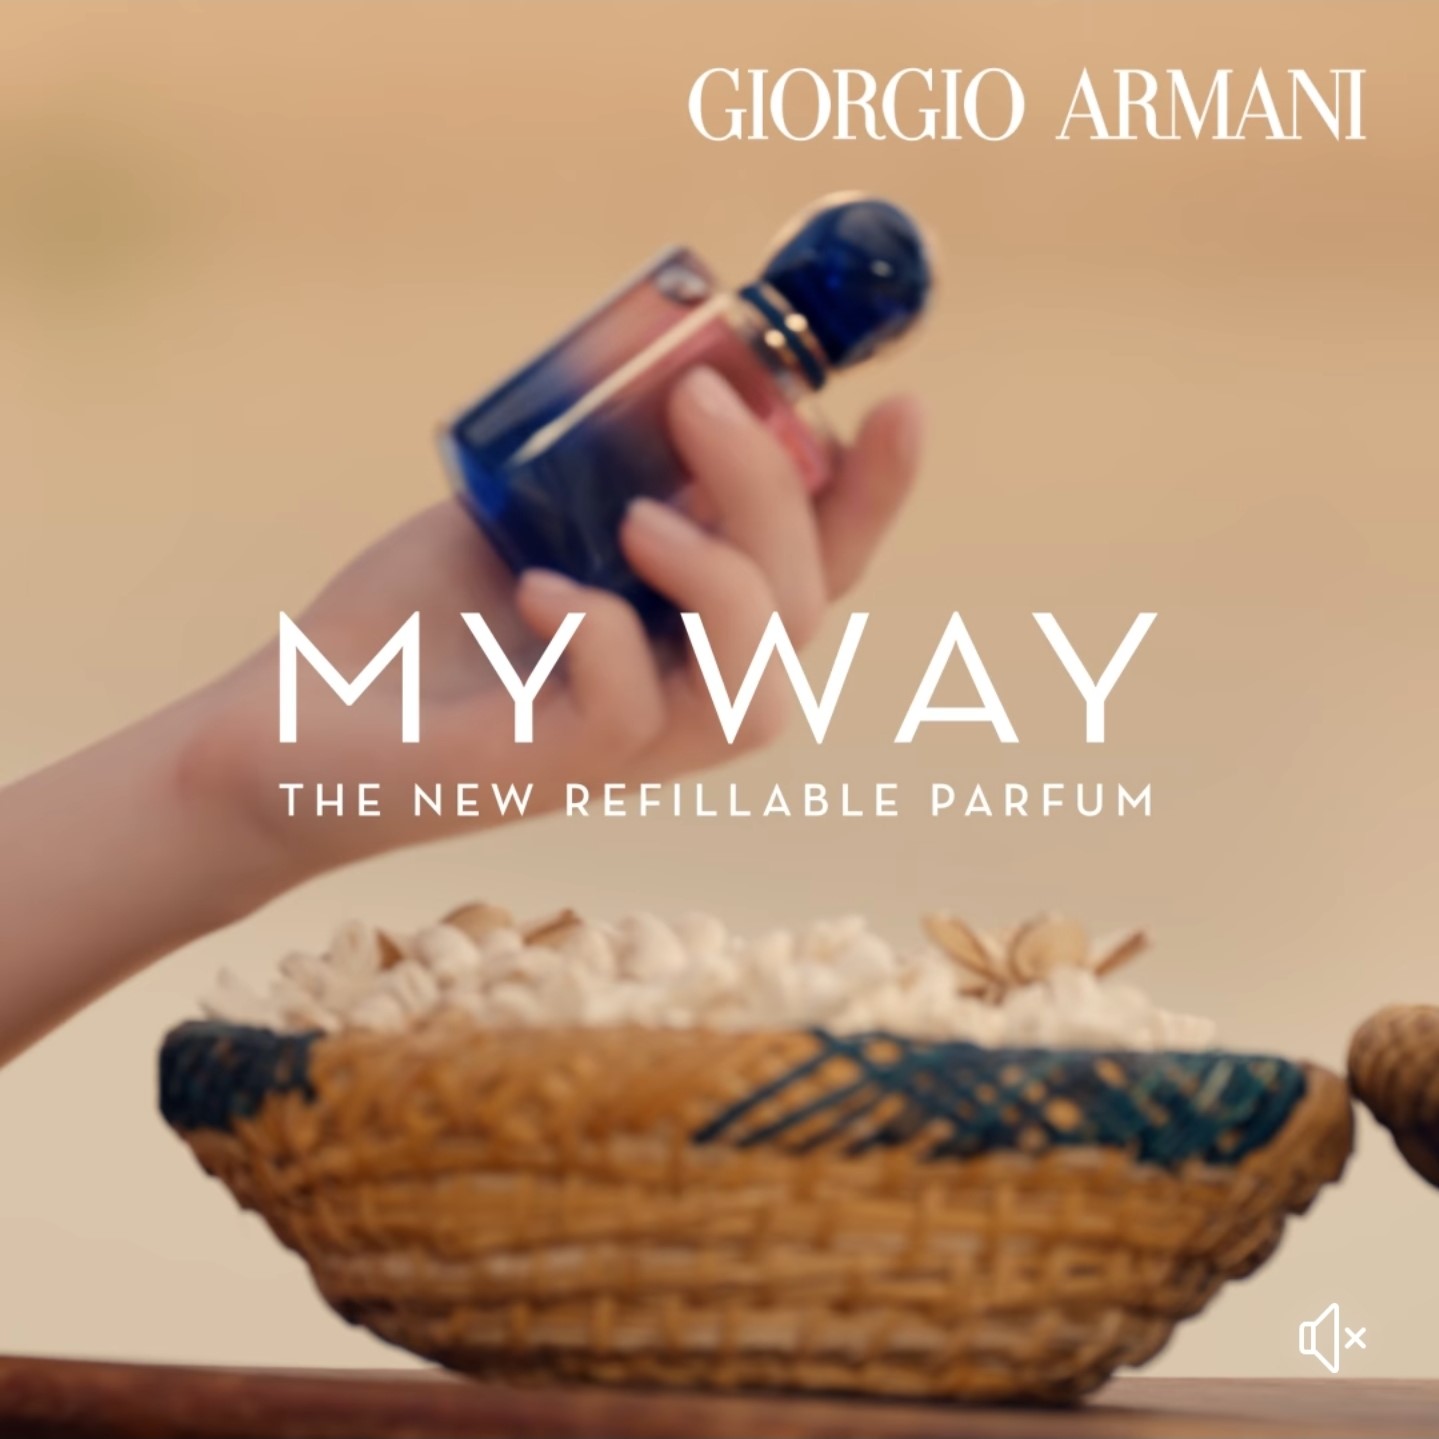 Free Sample of Armani New My Way Parfum